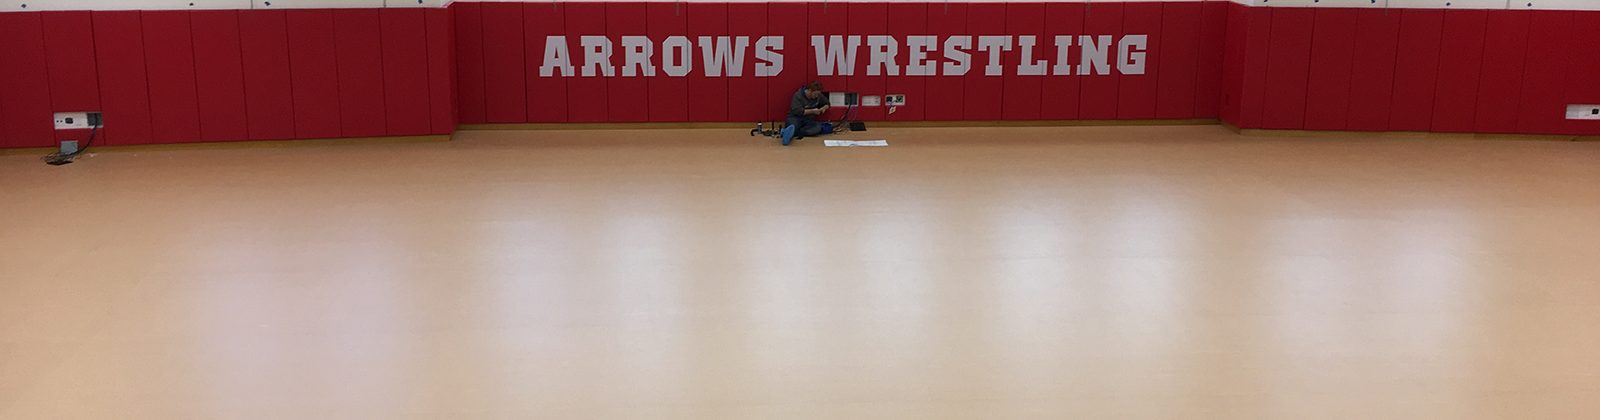 Wrestling room floors | FJ Roberts